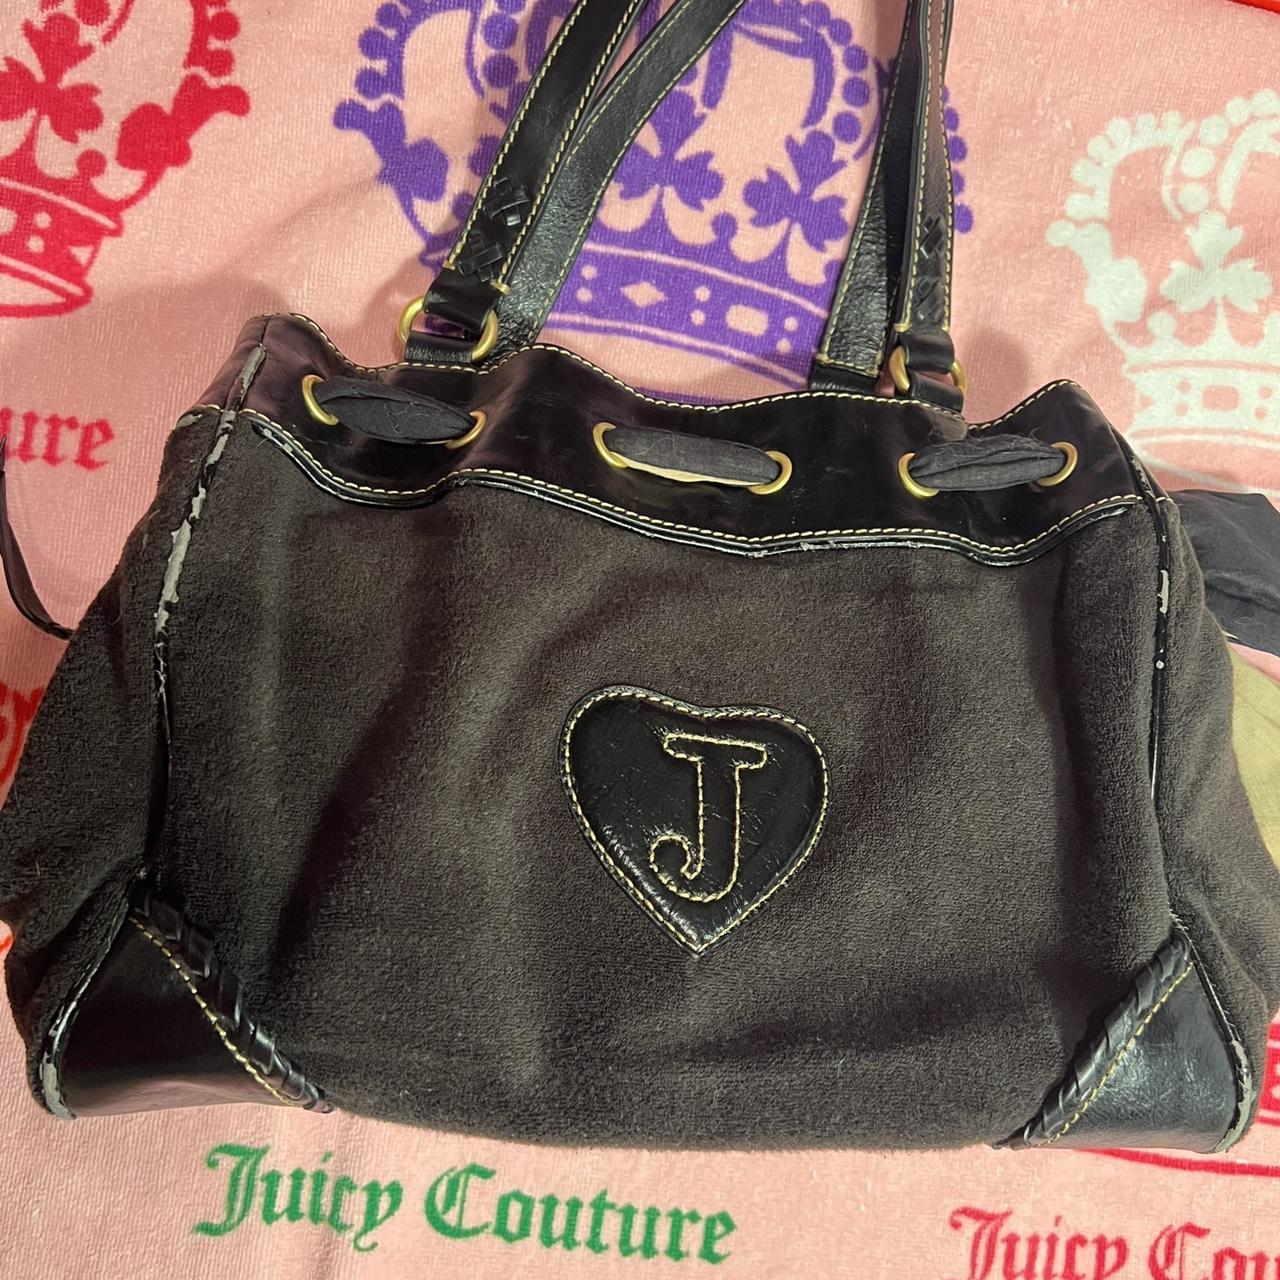 Juicy Couture gothic print gray black speedy bag. - Depop